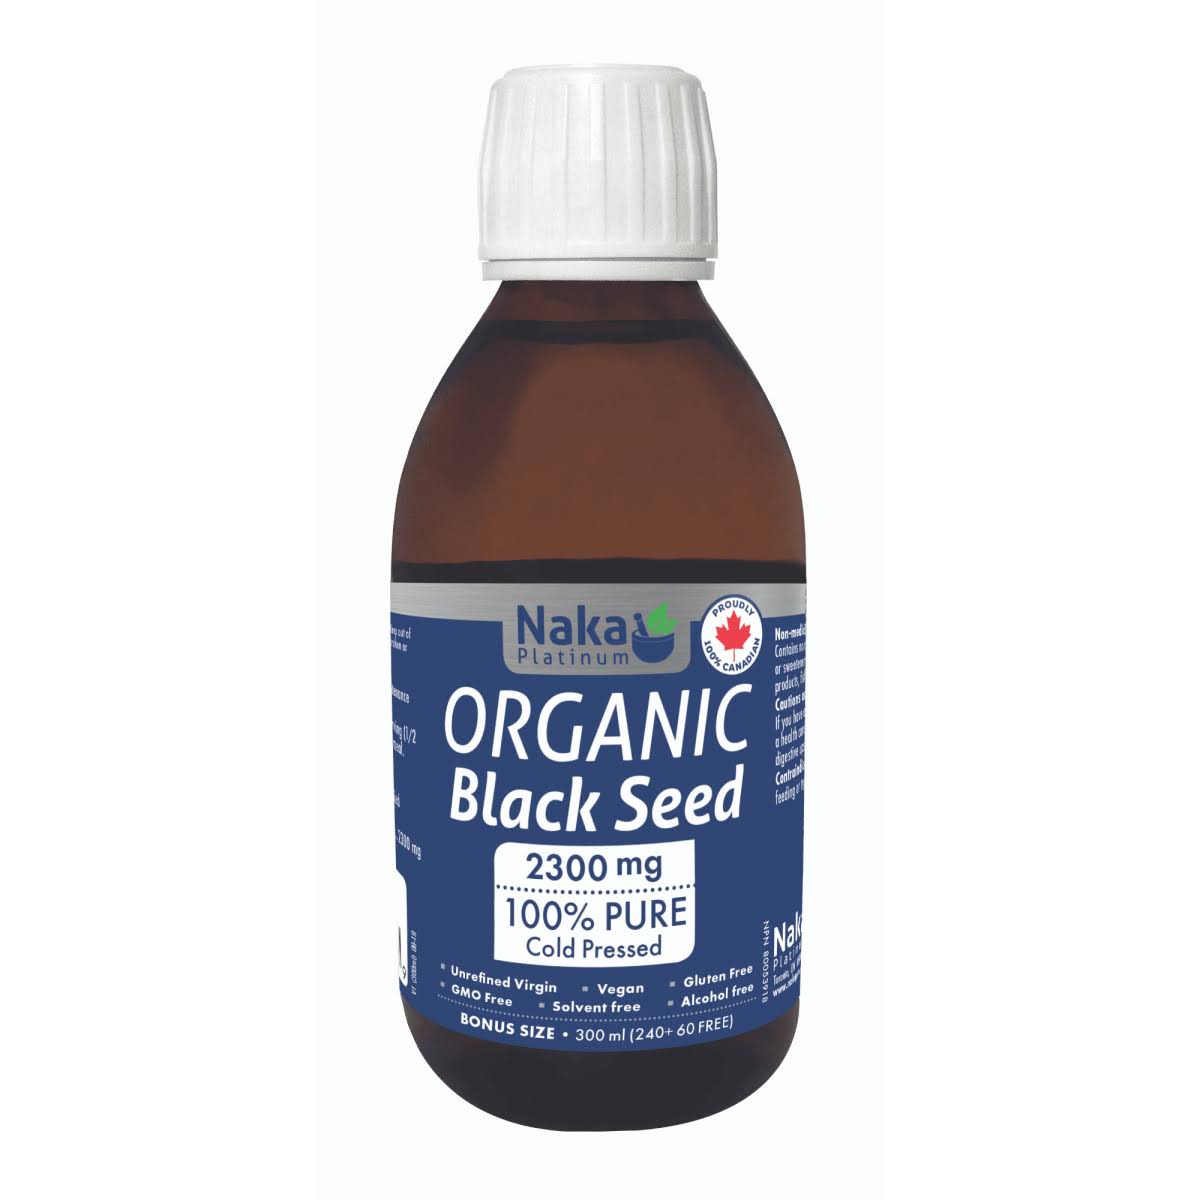 Naka Platinum Organic Black Seed - 300ml